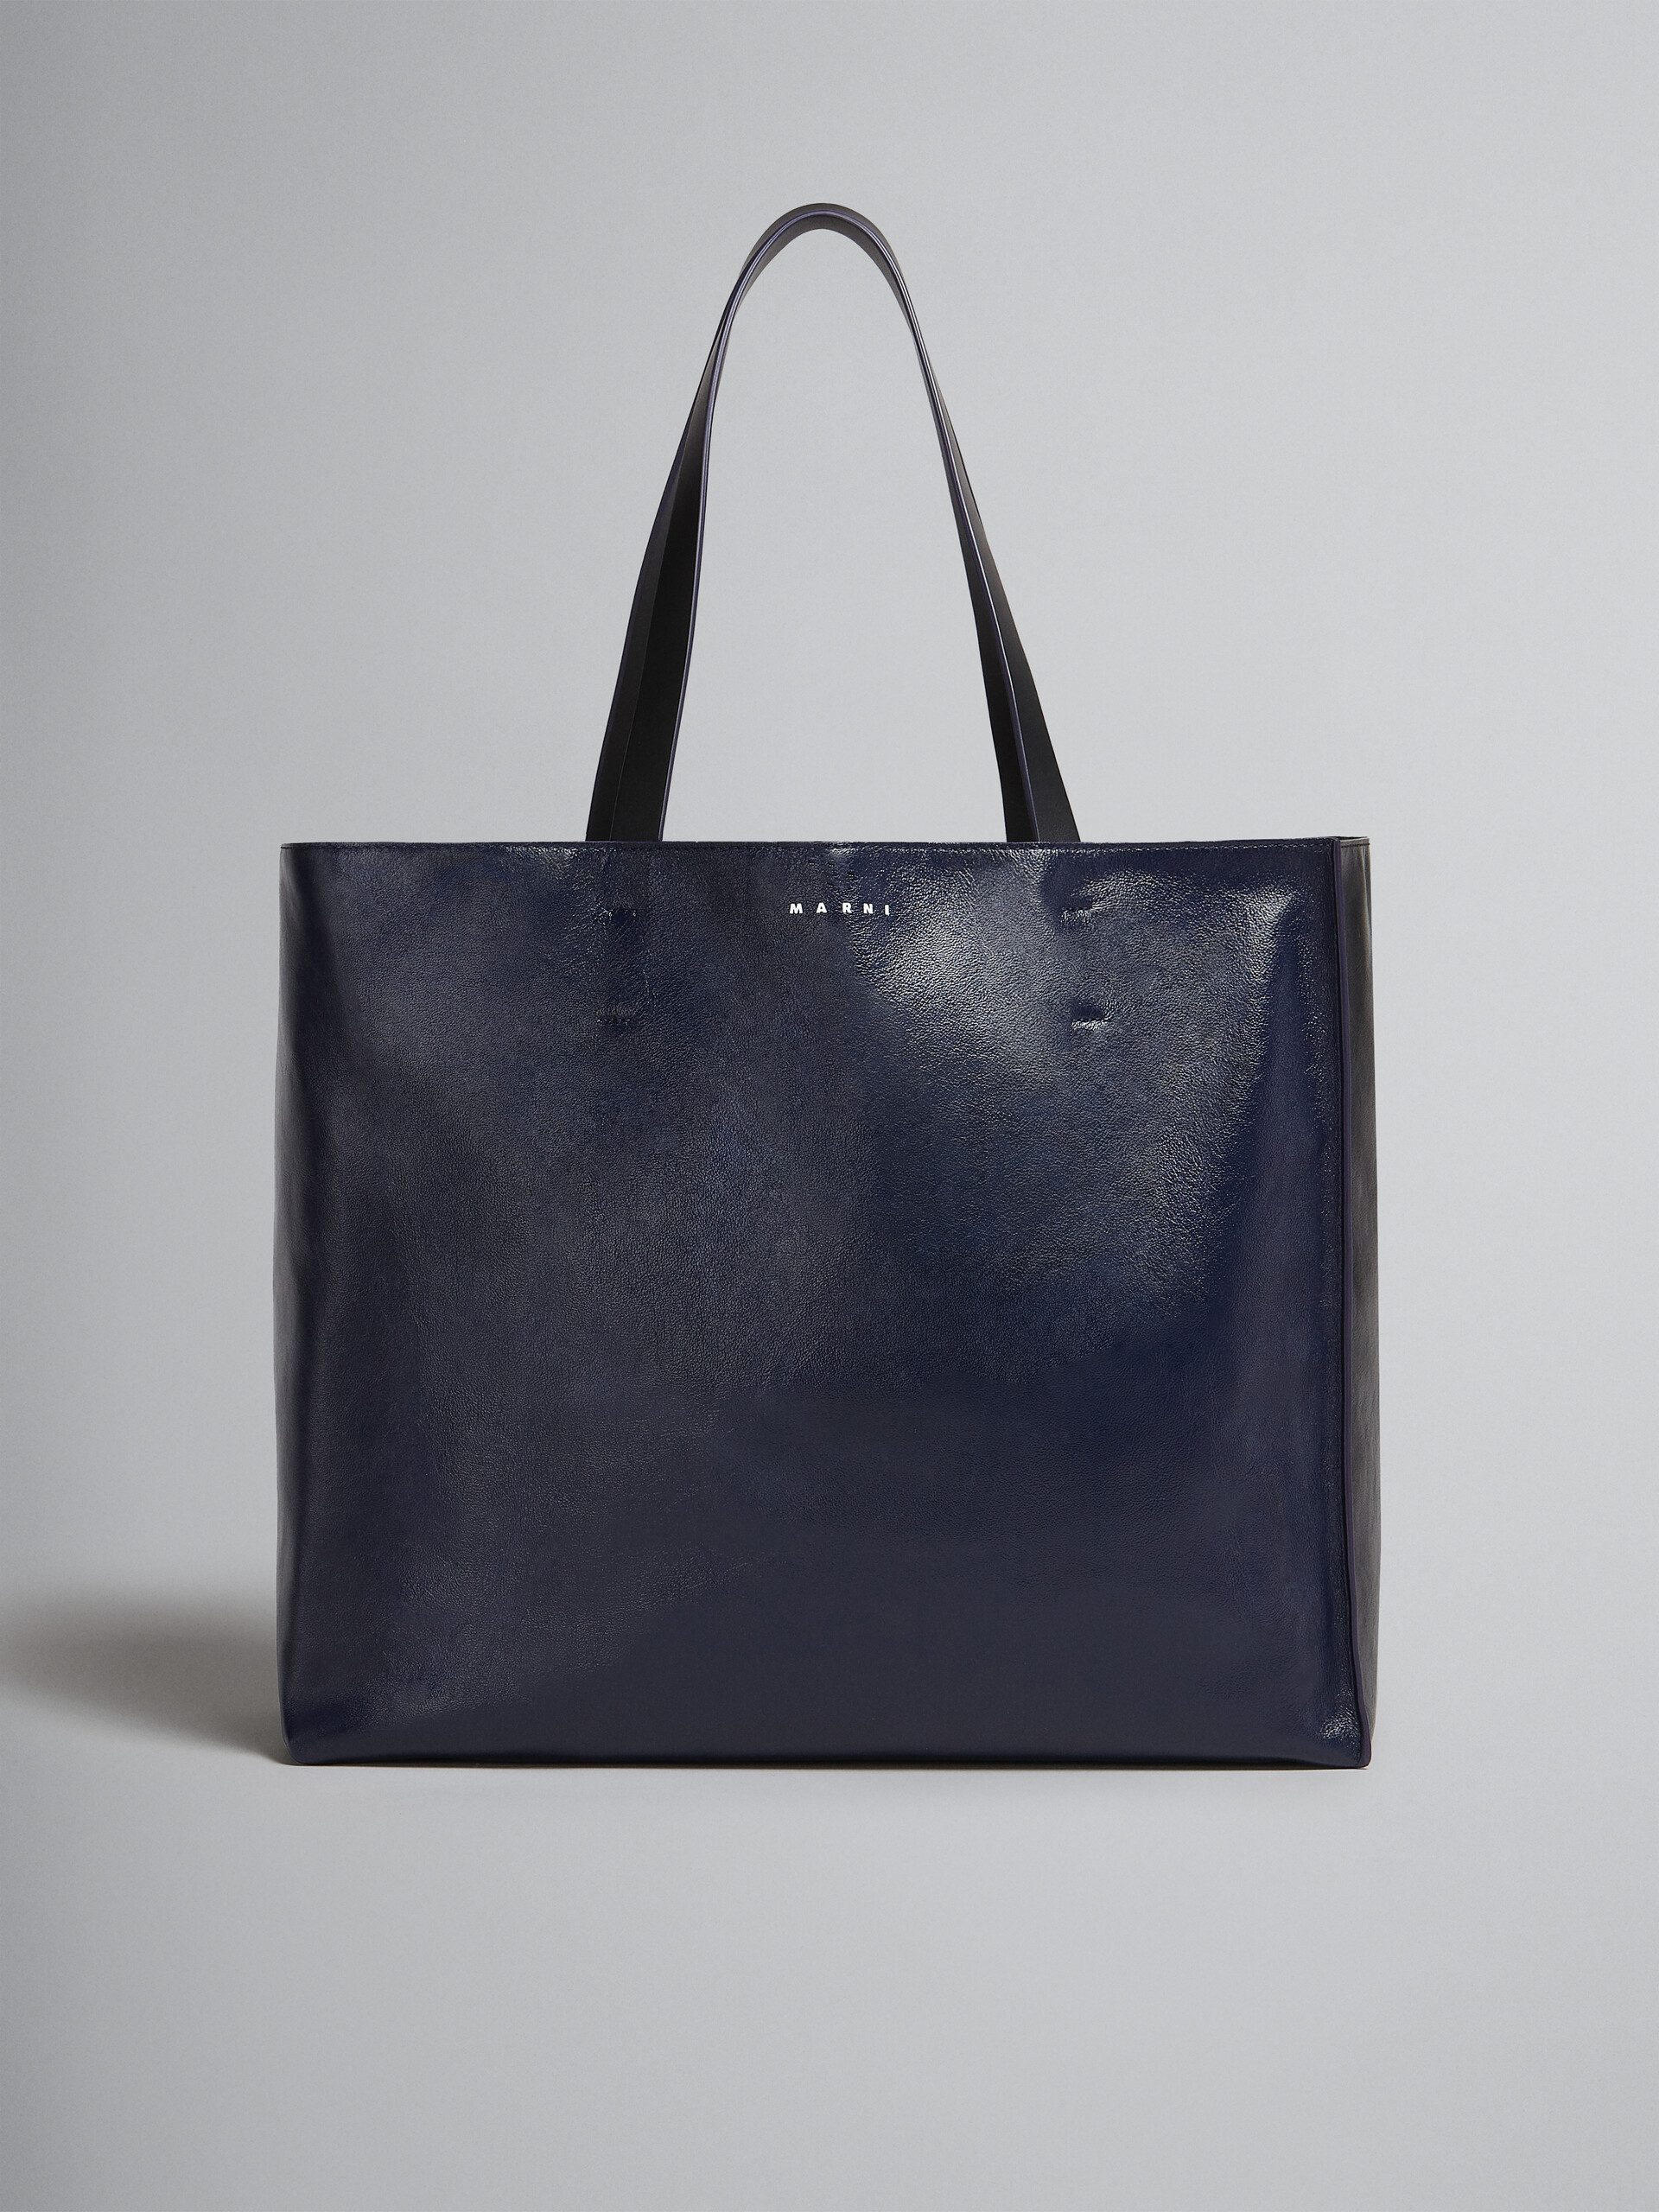 Museo Soft Bag in pelle blu e nera - Borse shopping - Image 1